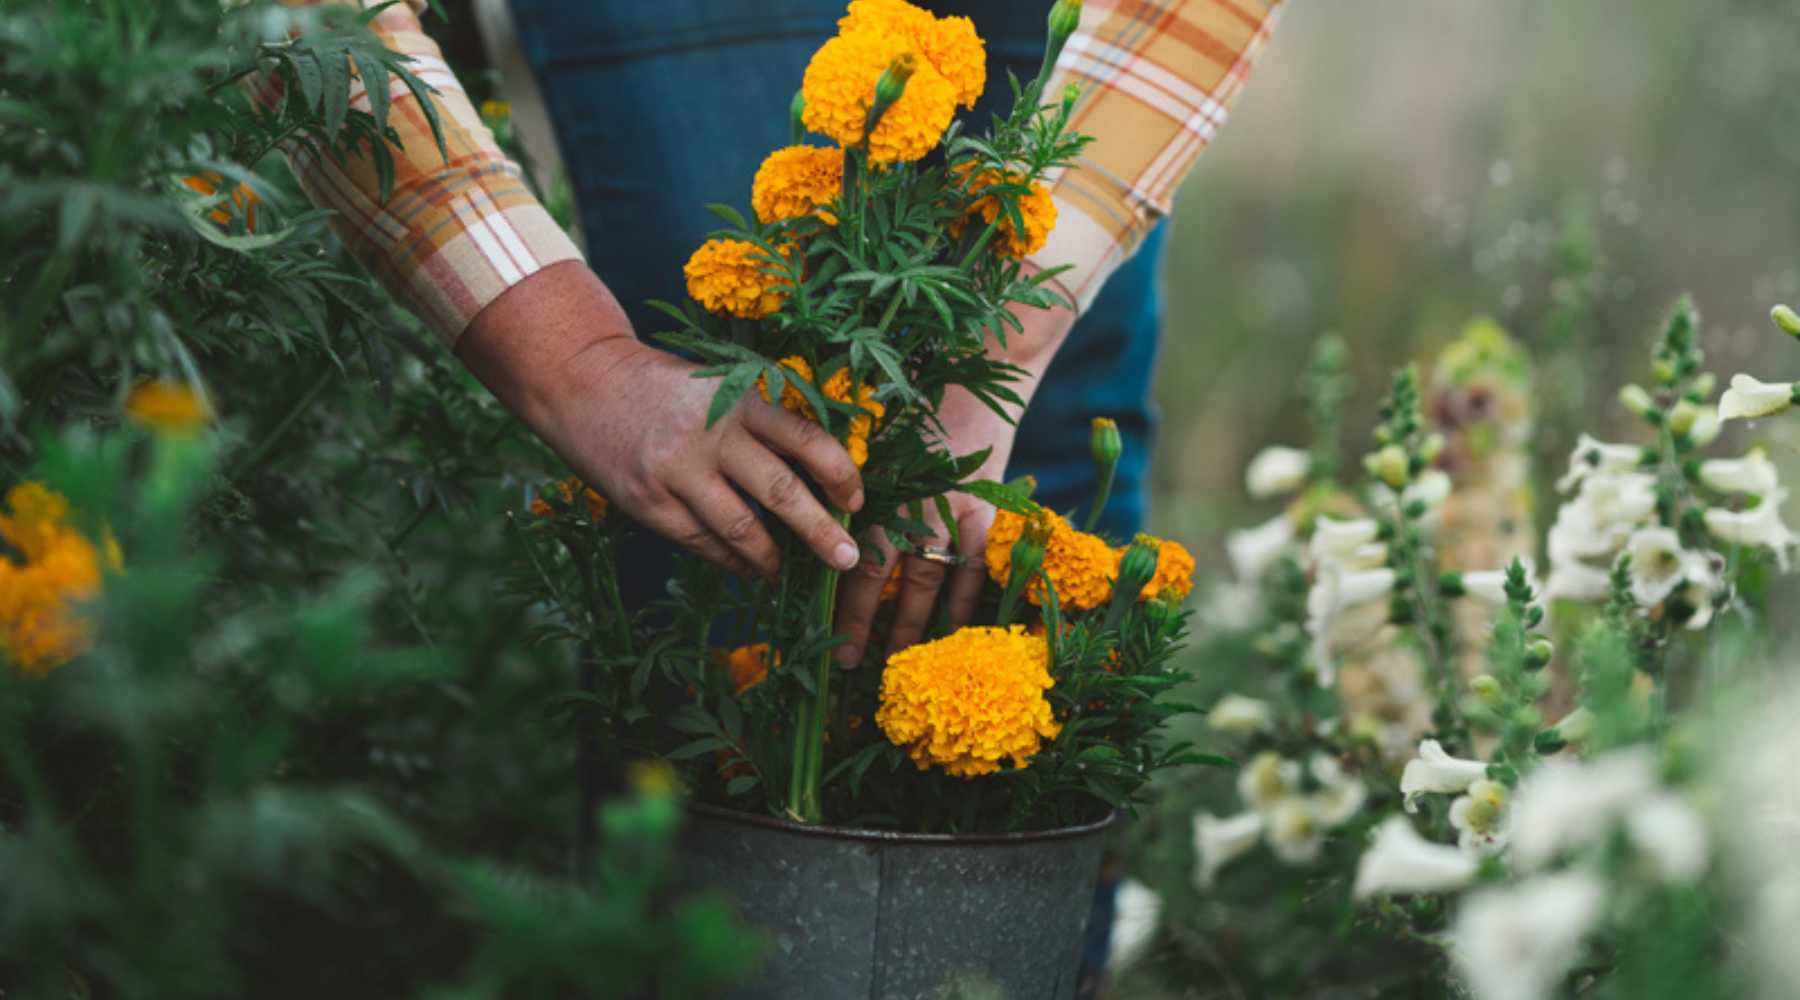 Woman farmer placing cut marigolds into a bucket in a flower field.